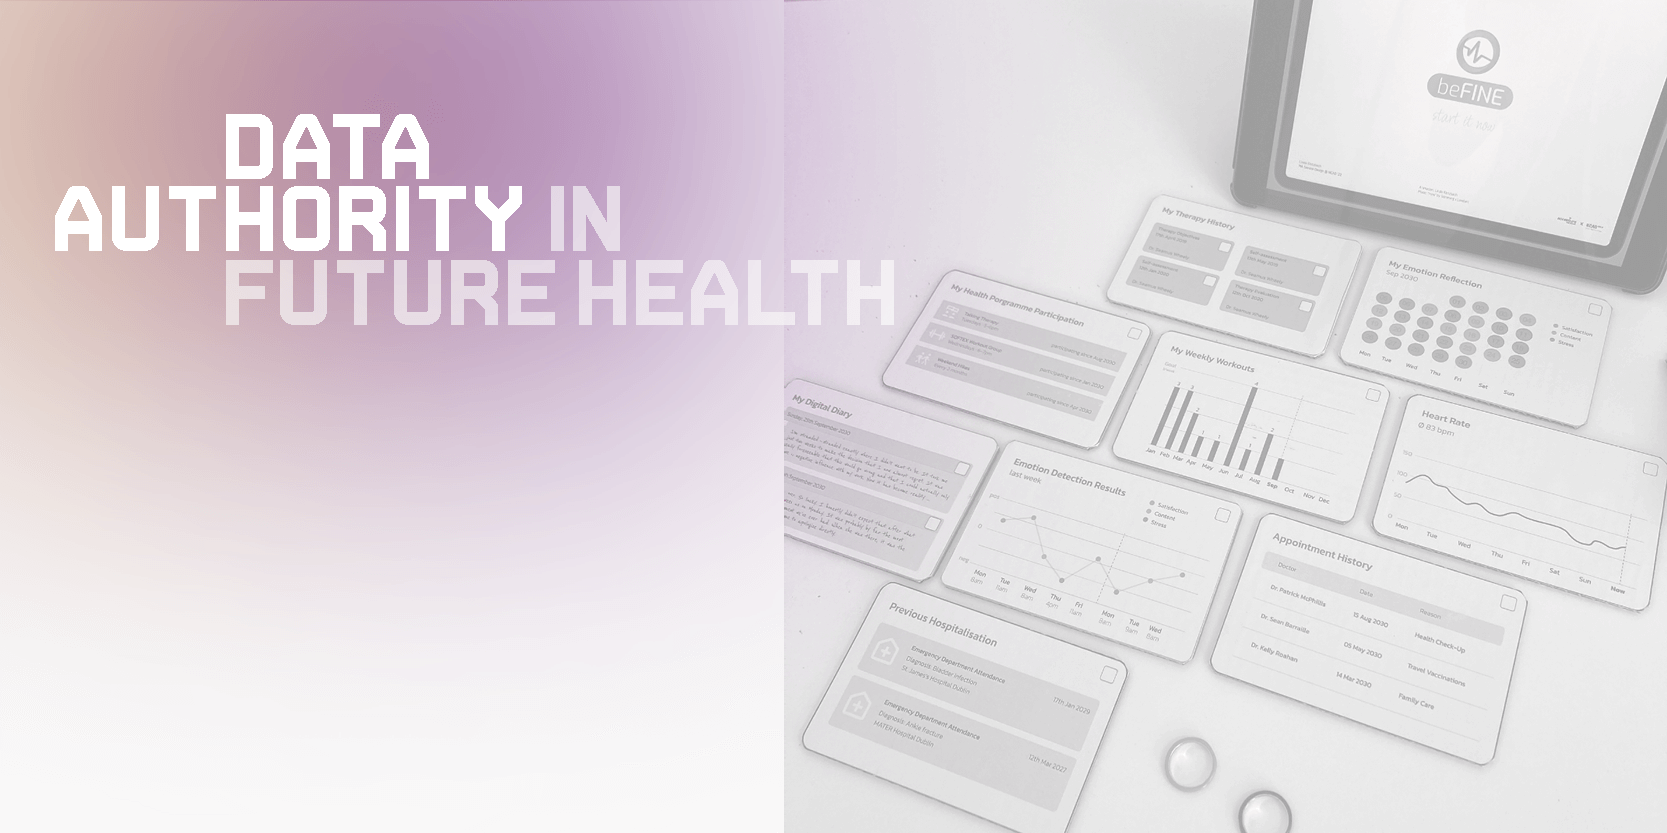 Data Authority in Future Health